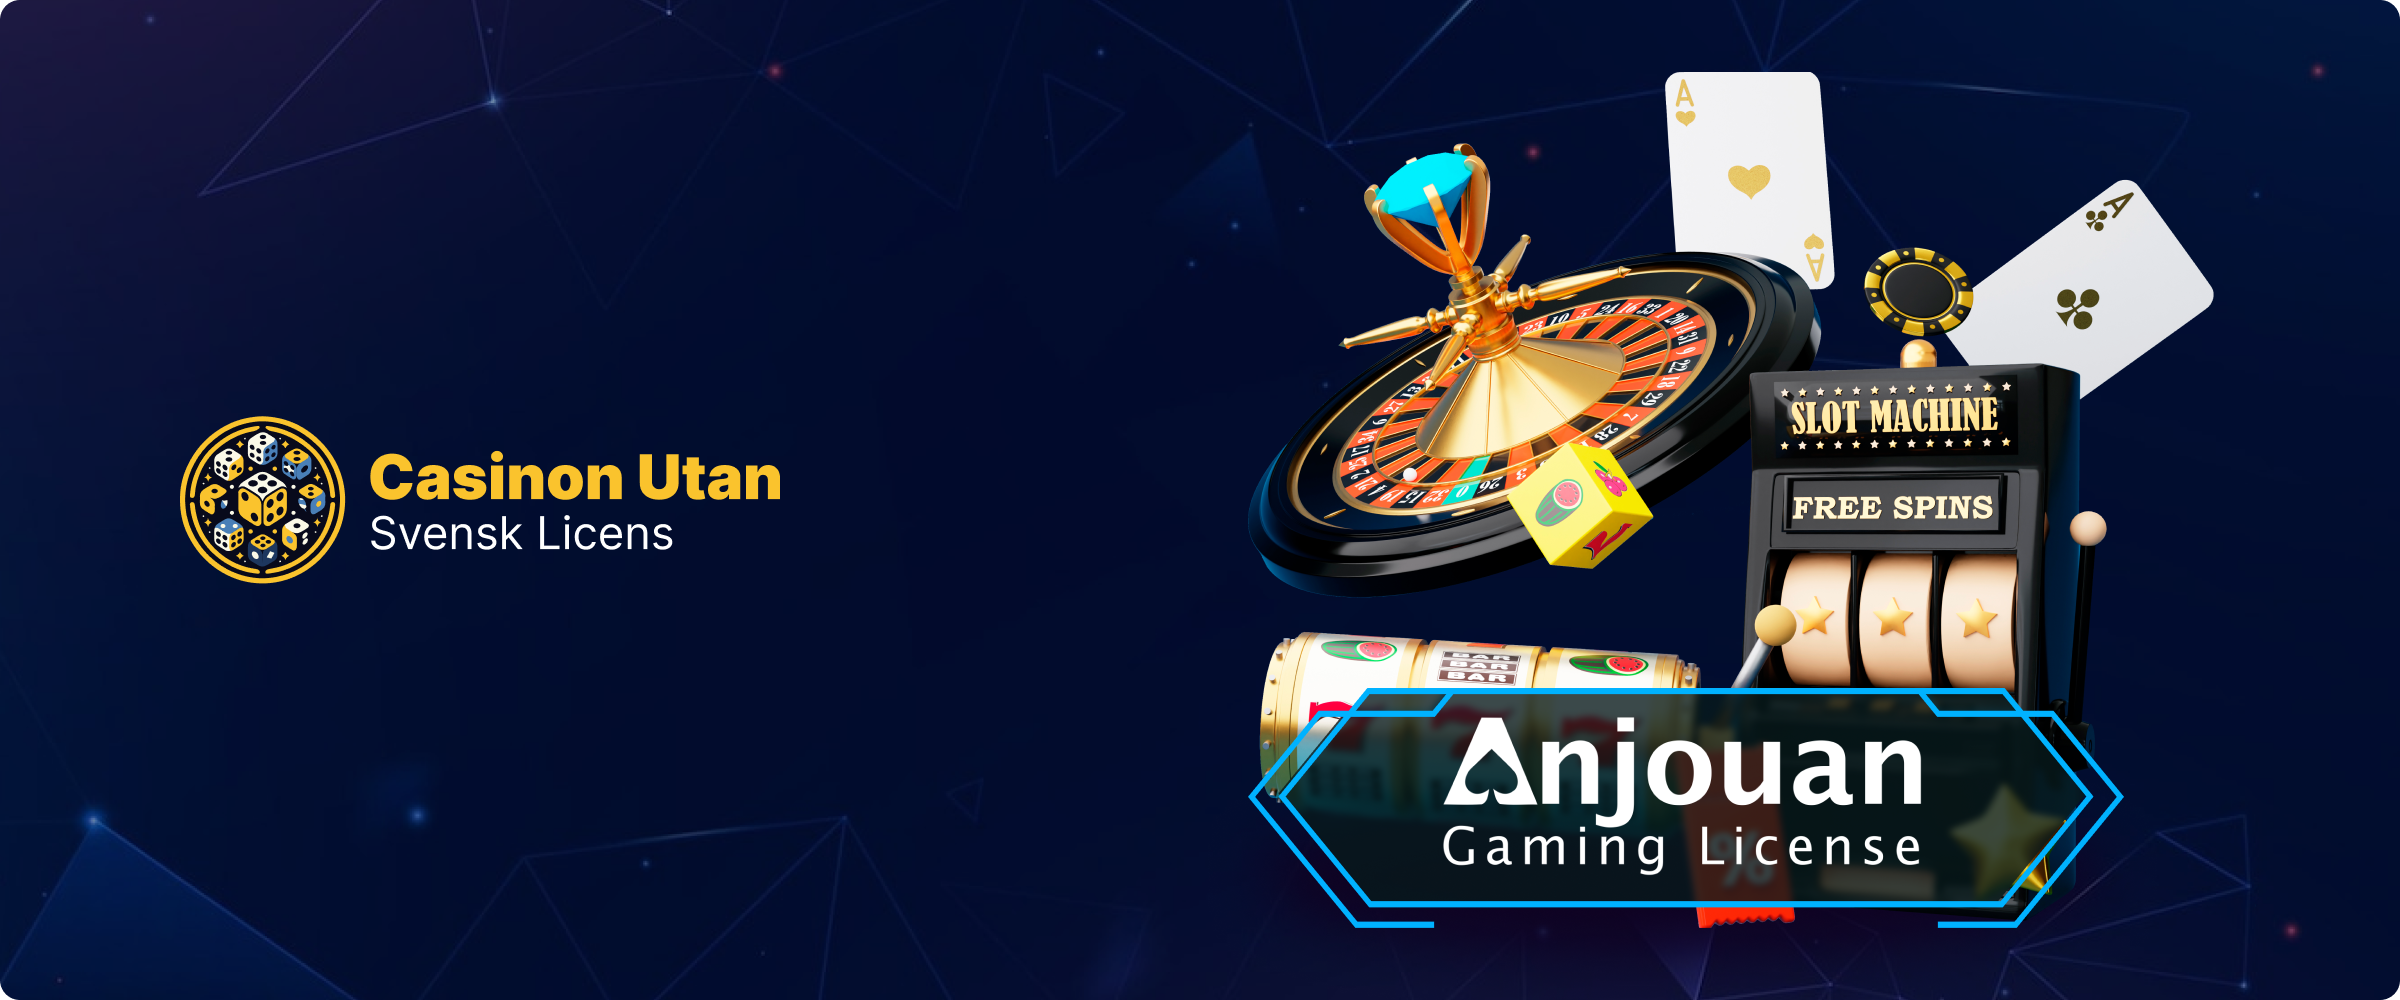 Anjouan_Gaming_License-2